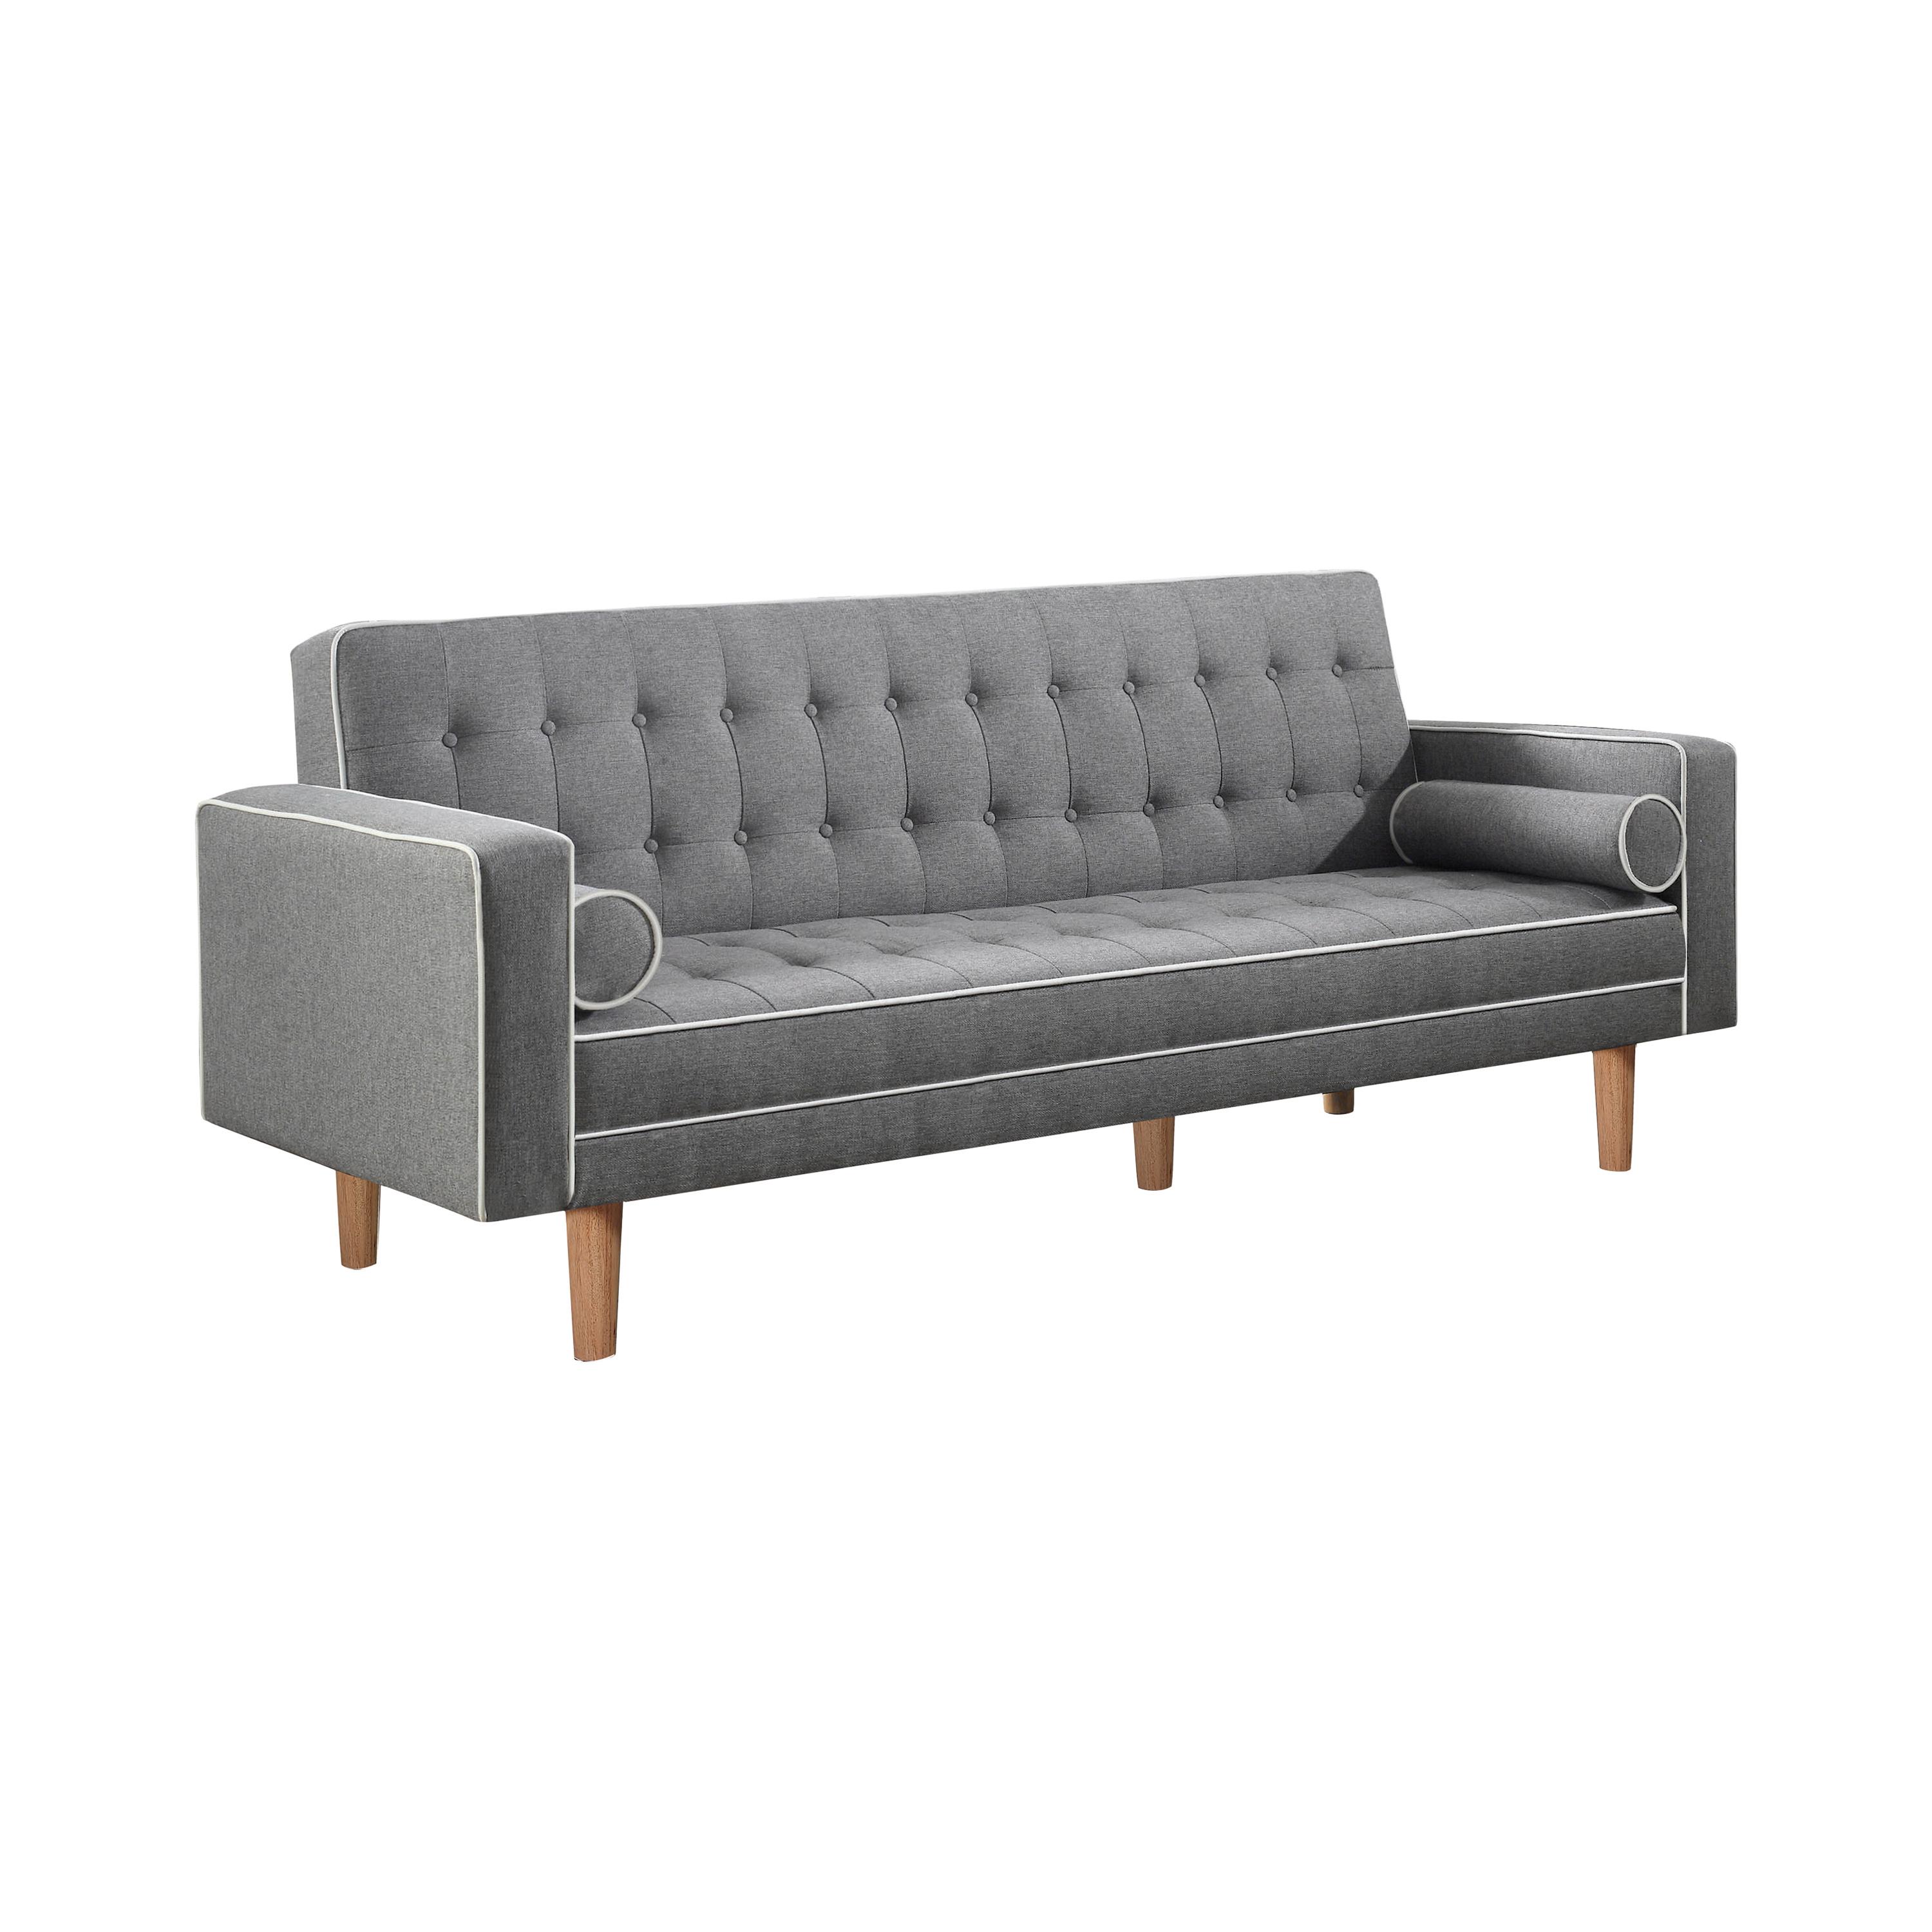 

    
Contemporary Gray Woven Fabric Upholstery Sofa Bed Coaster 350405 Lassen
